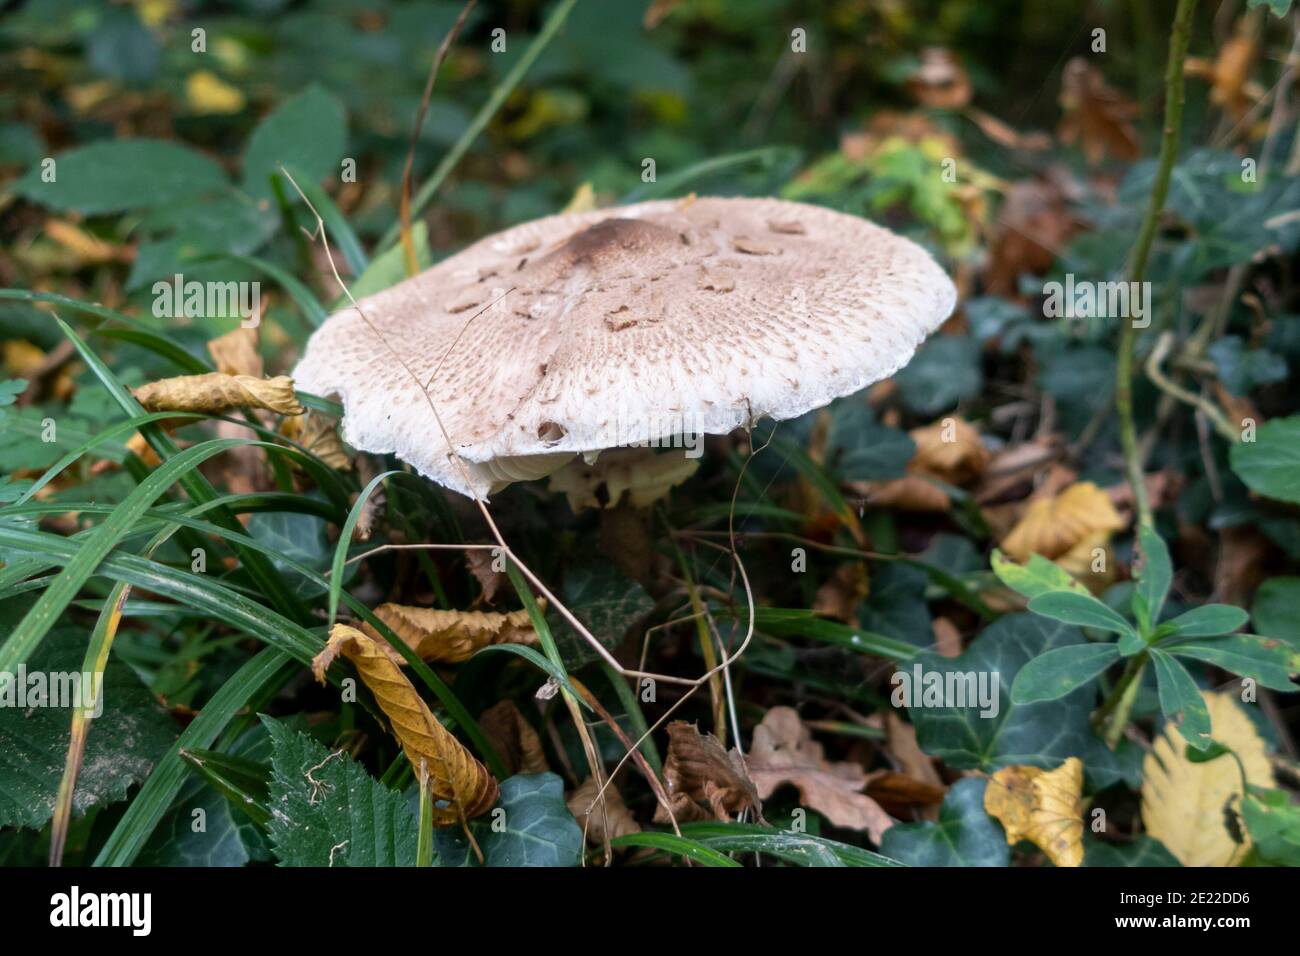 Parasol mushroom, East Sussex, UK Stock Photo